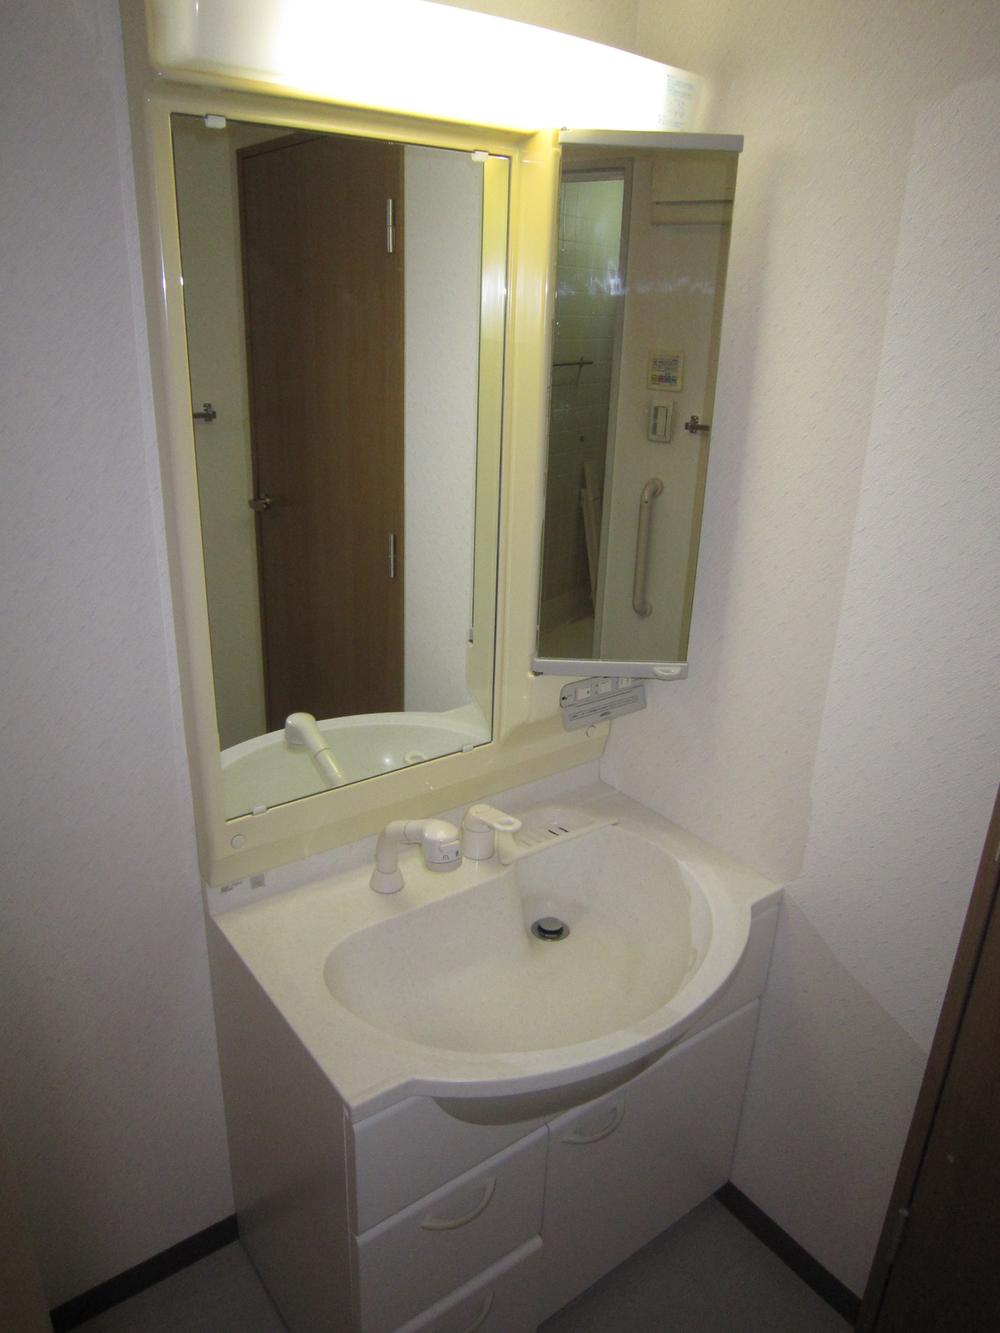 Wash basin, toilet. Wash room (2013 December shooting)